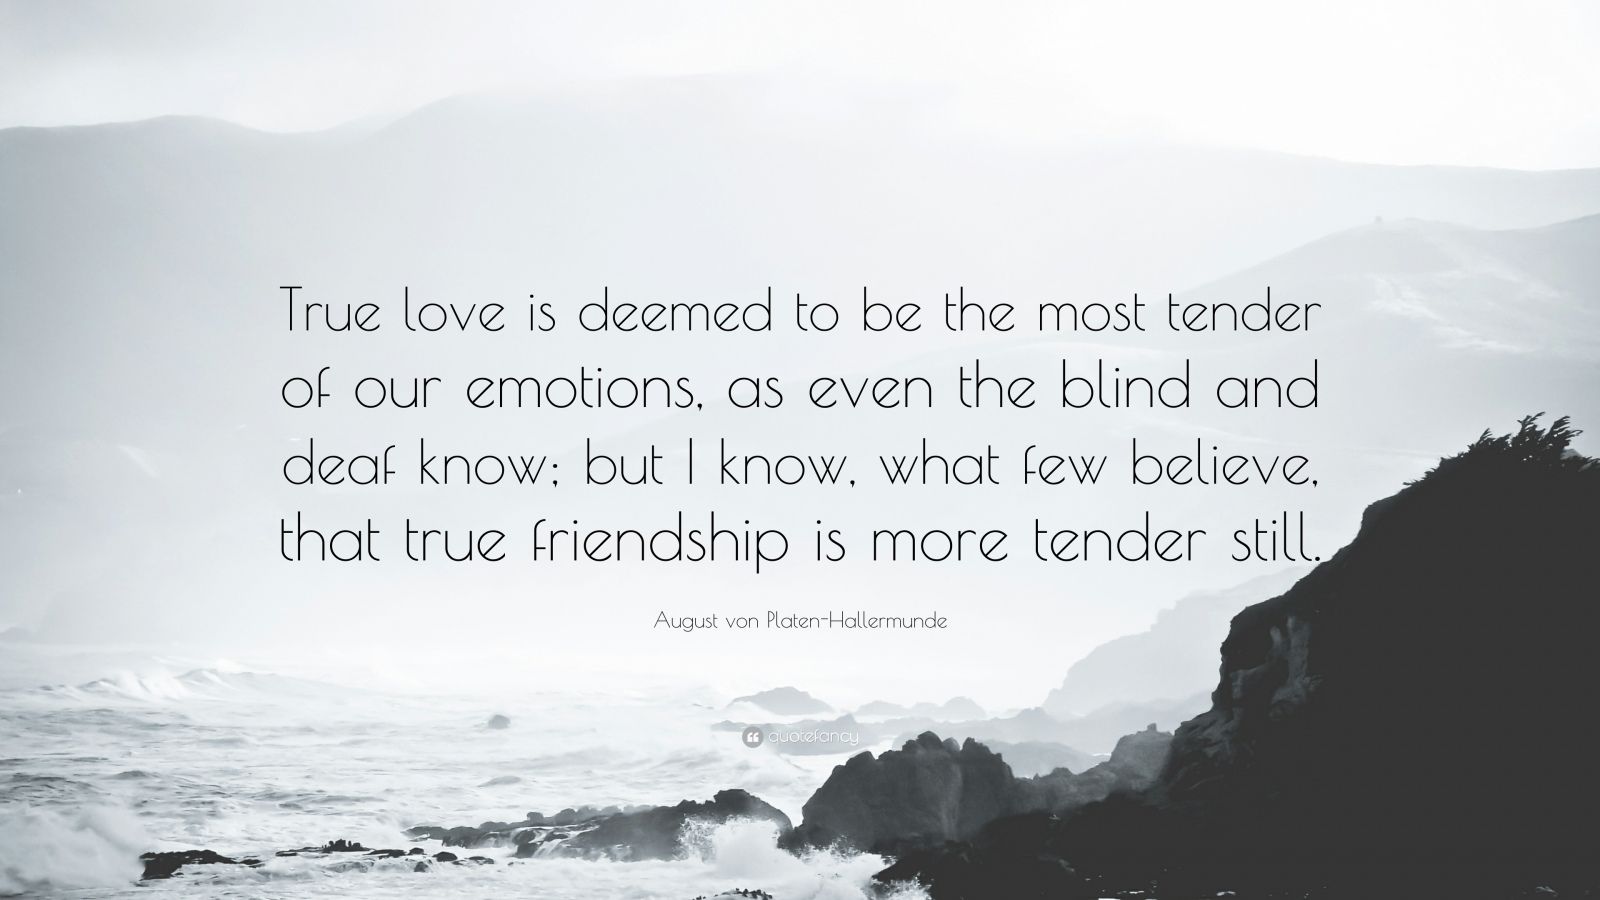 August von Platen Hallermunde Quote “True love is deemed to be the most